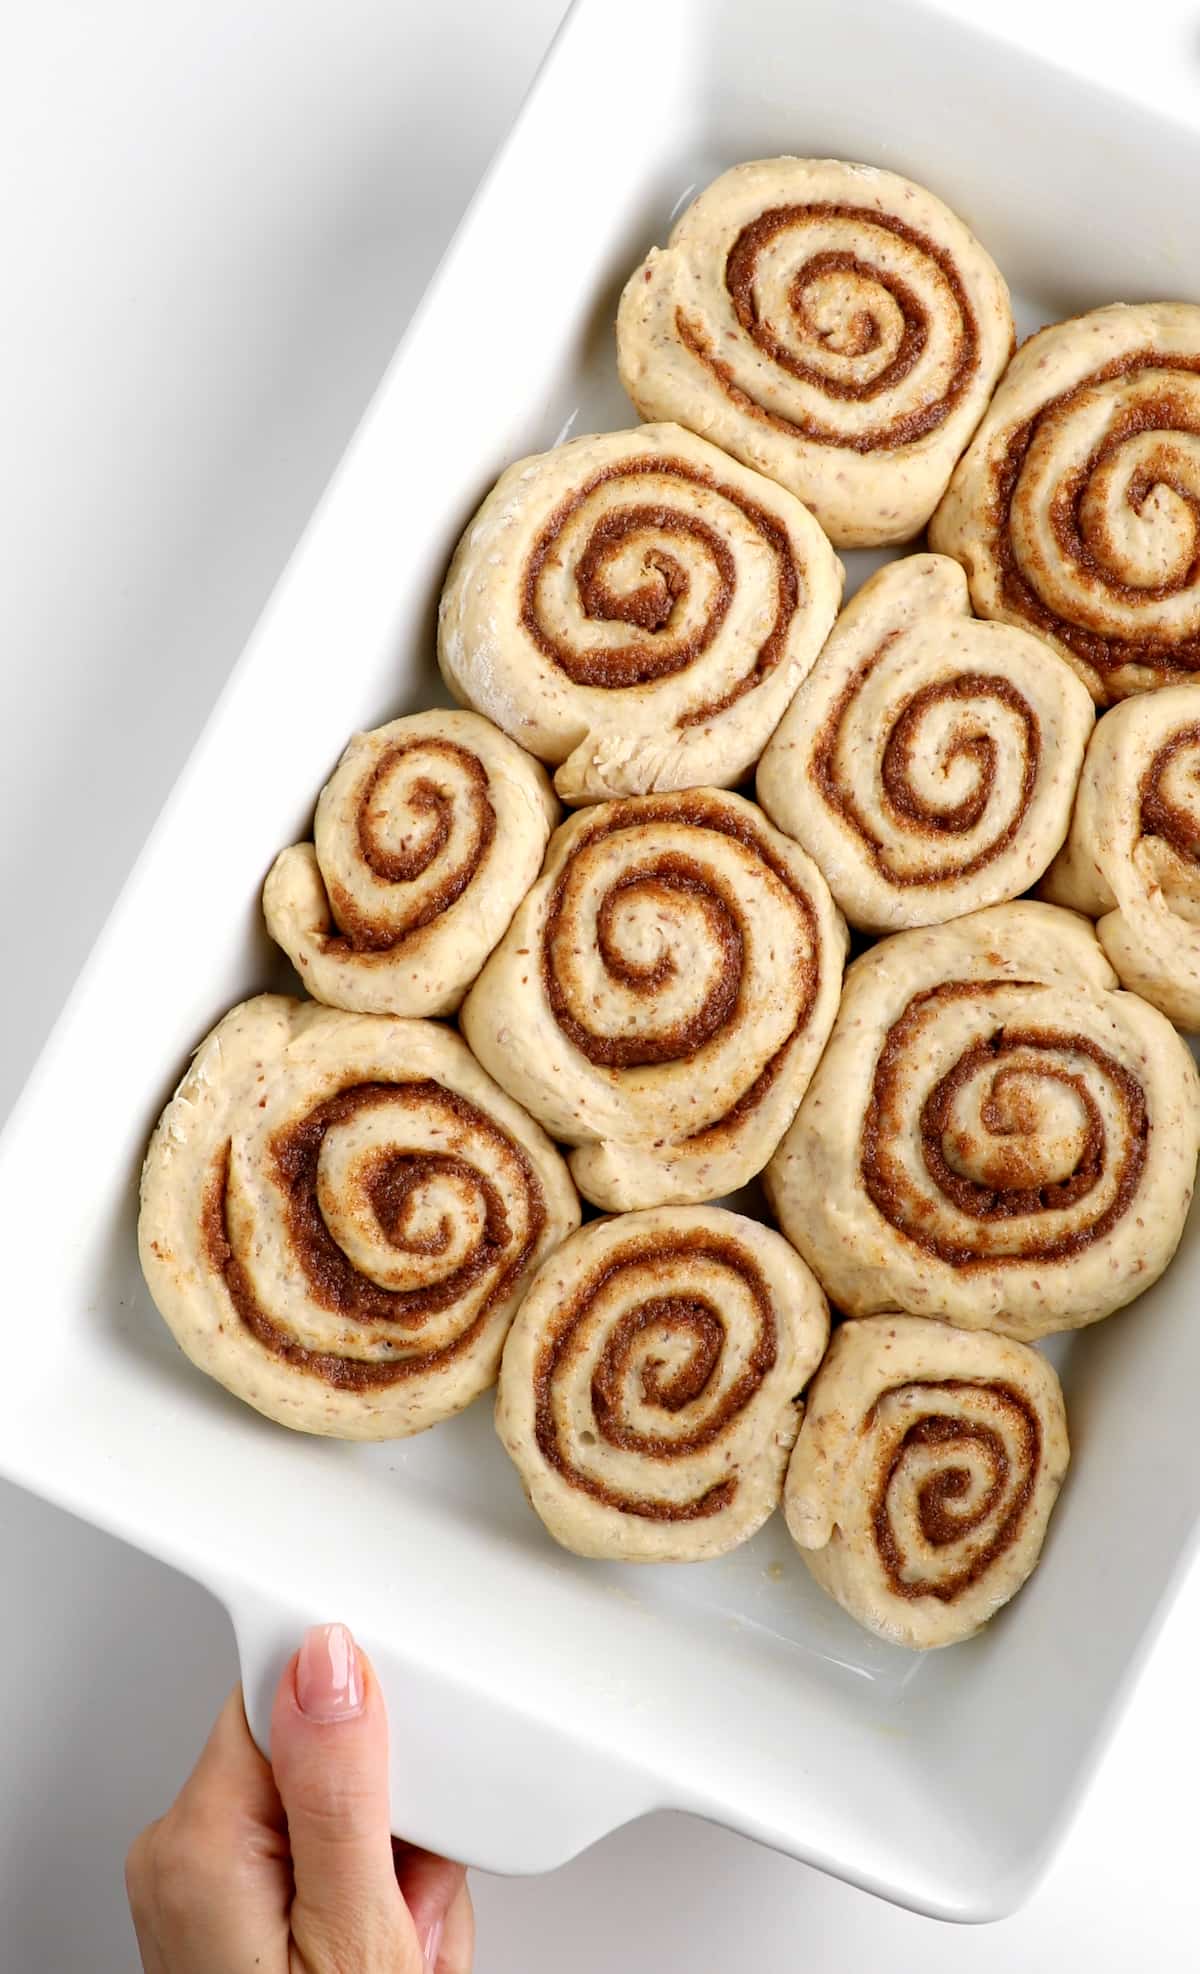 Vegan cinnamon rolls in a baking dish.